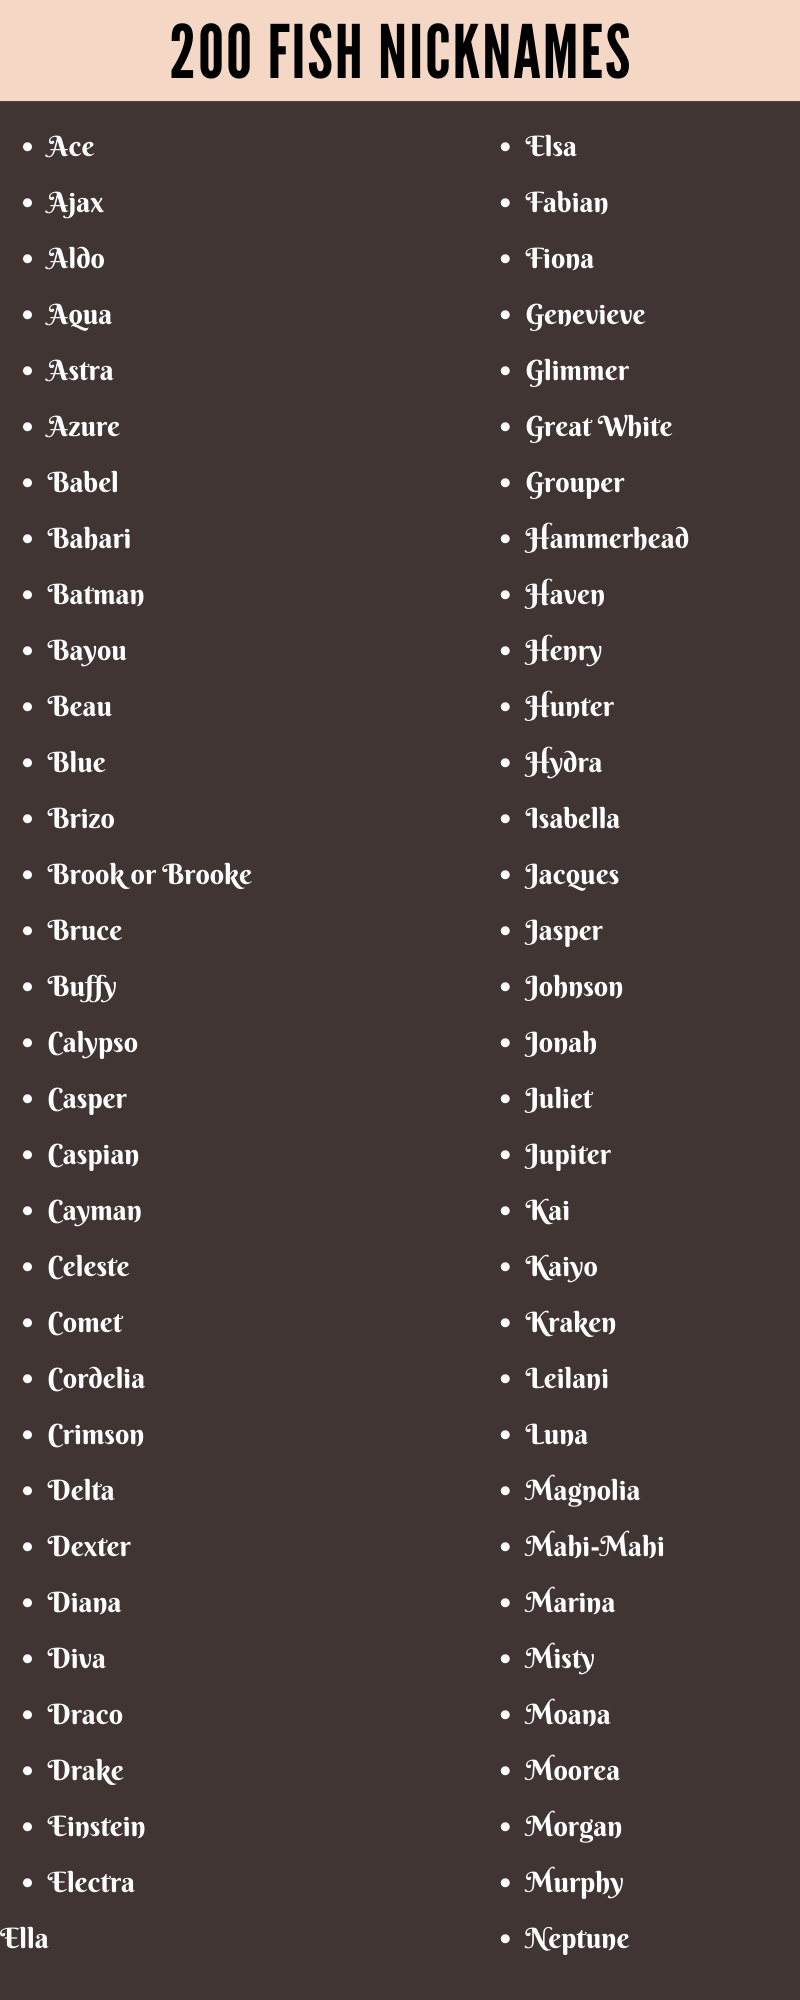  fish nicknames